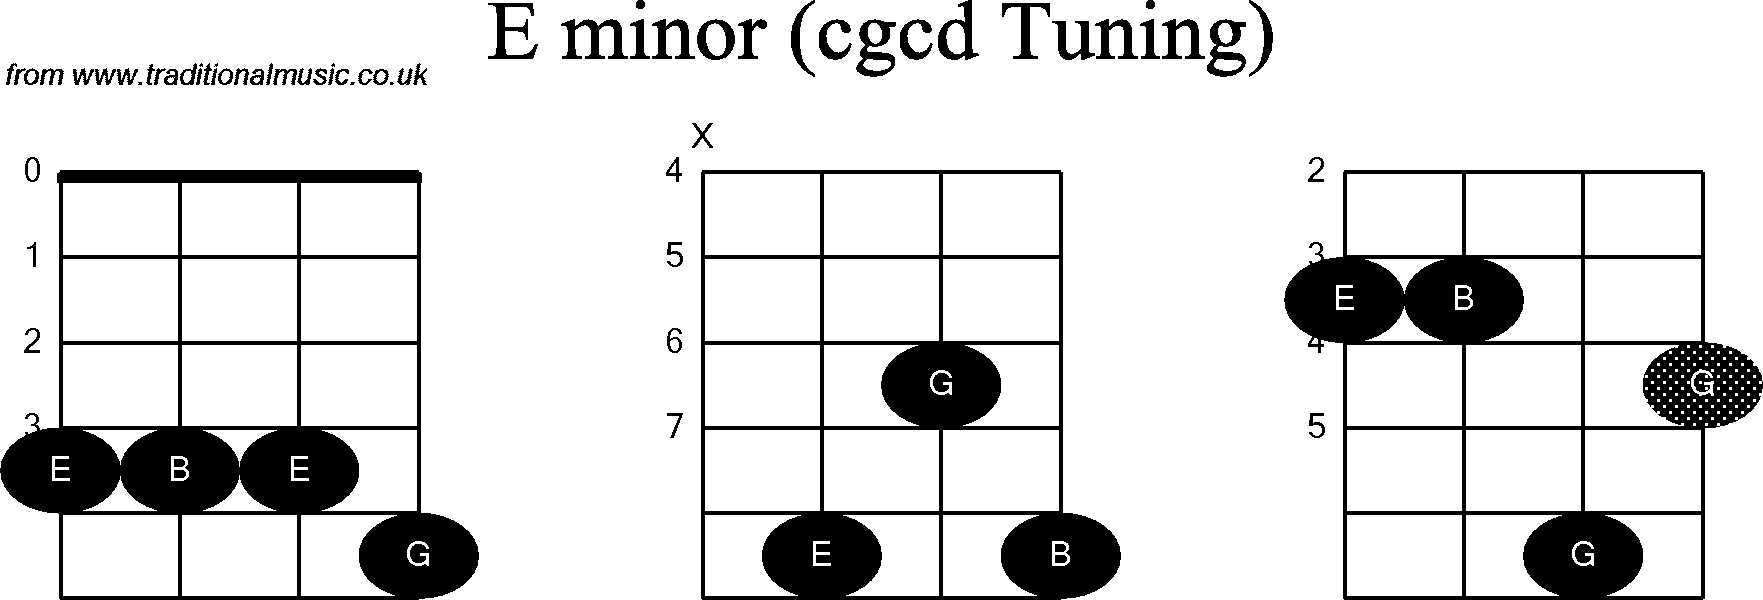 Chord diagrams for Banjo(Double C) E Minor